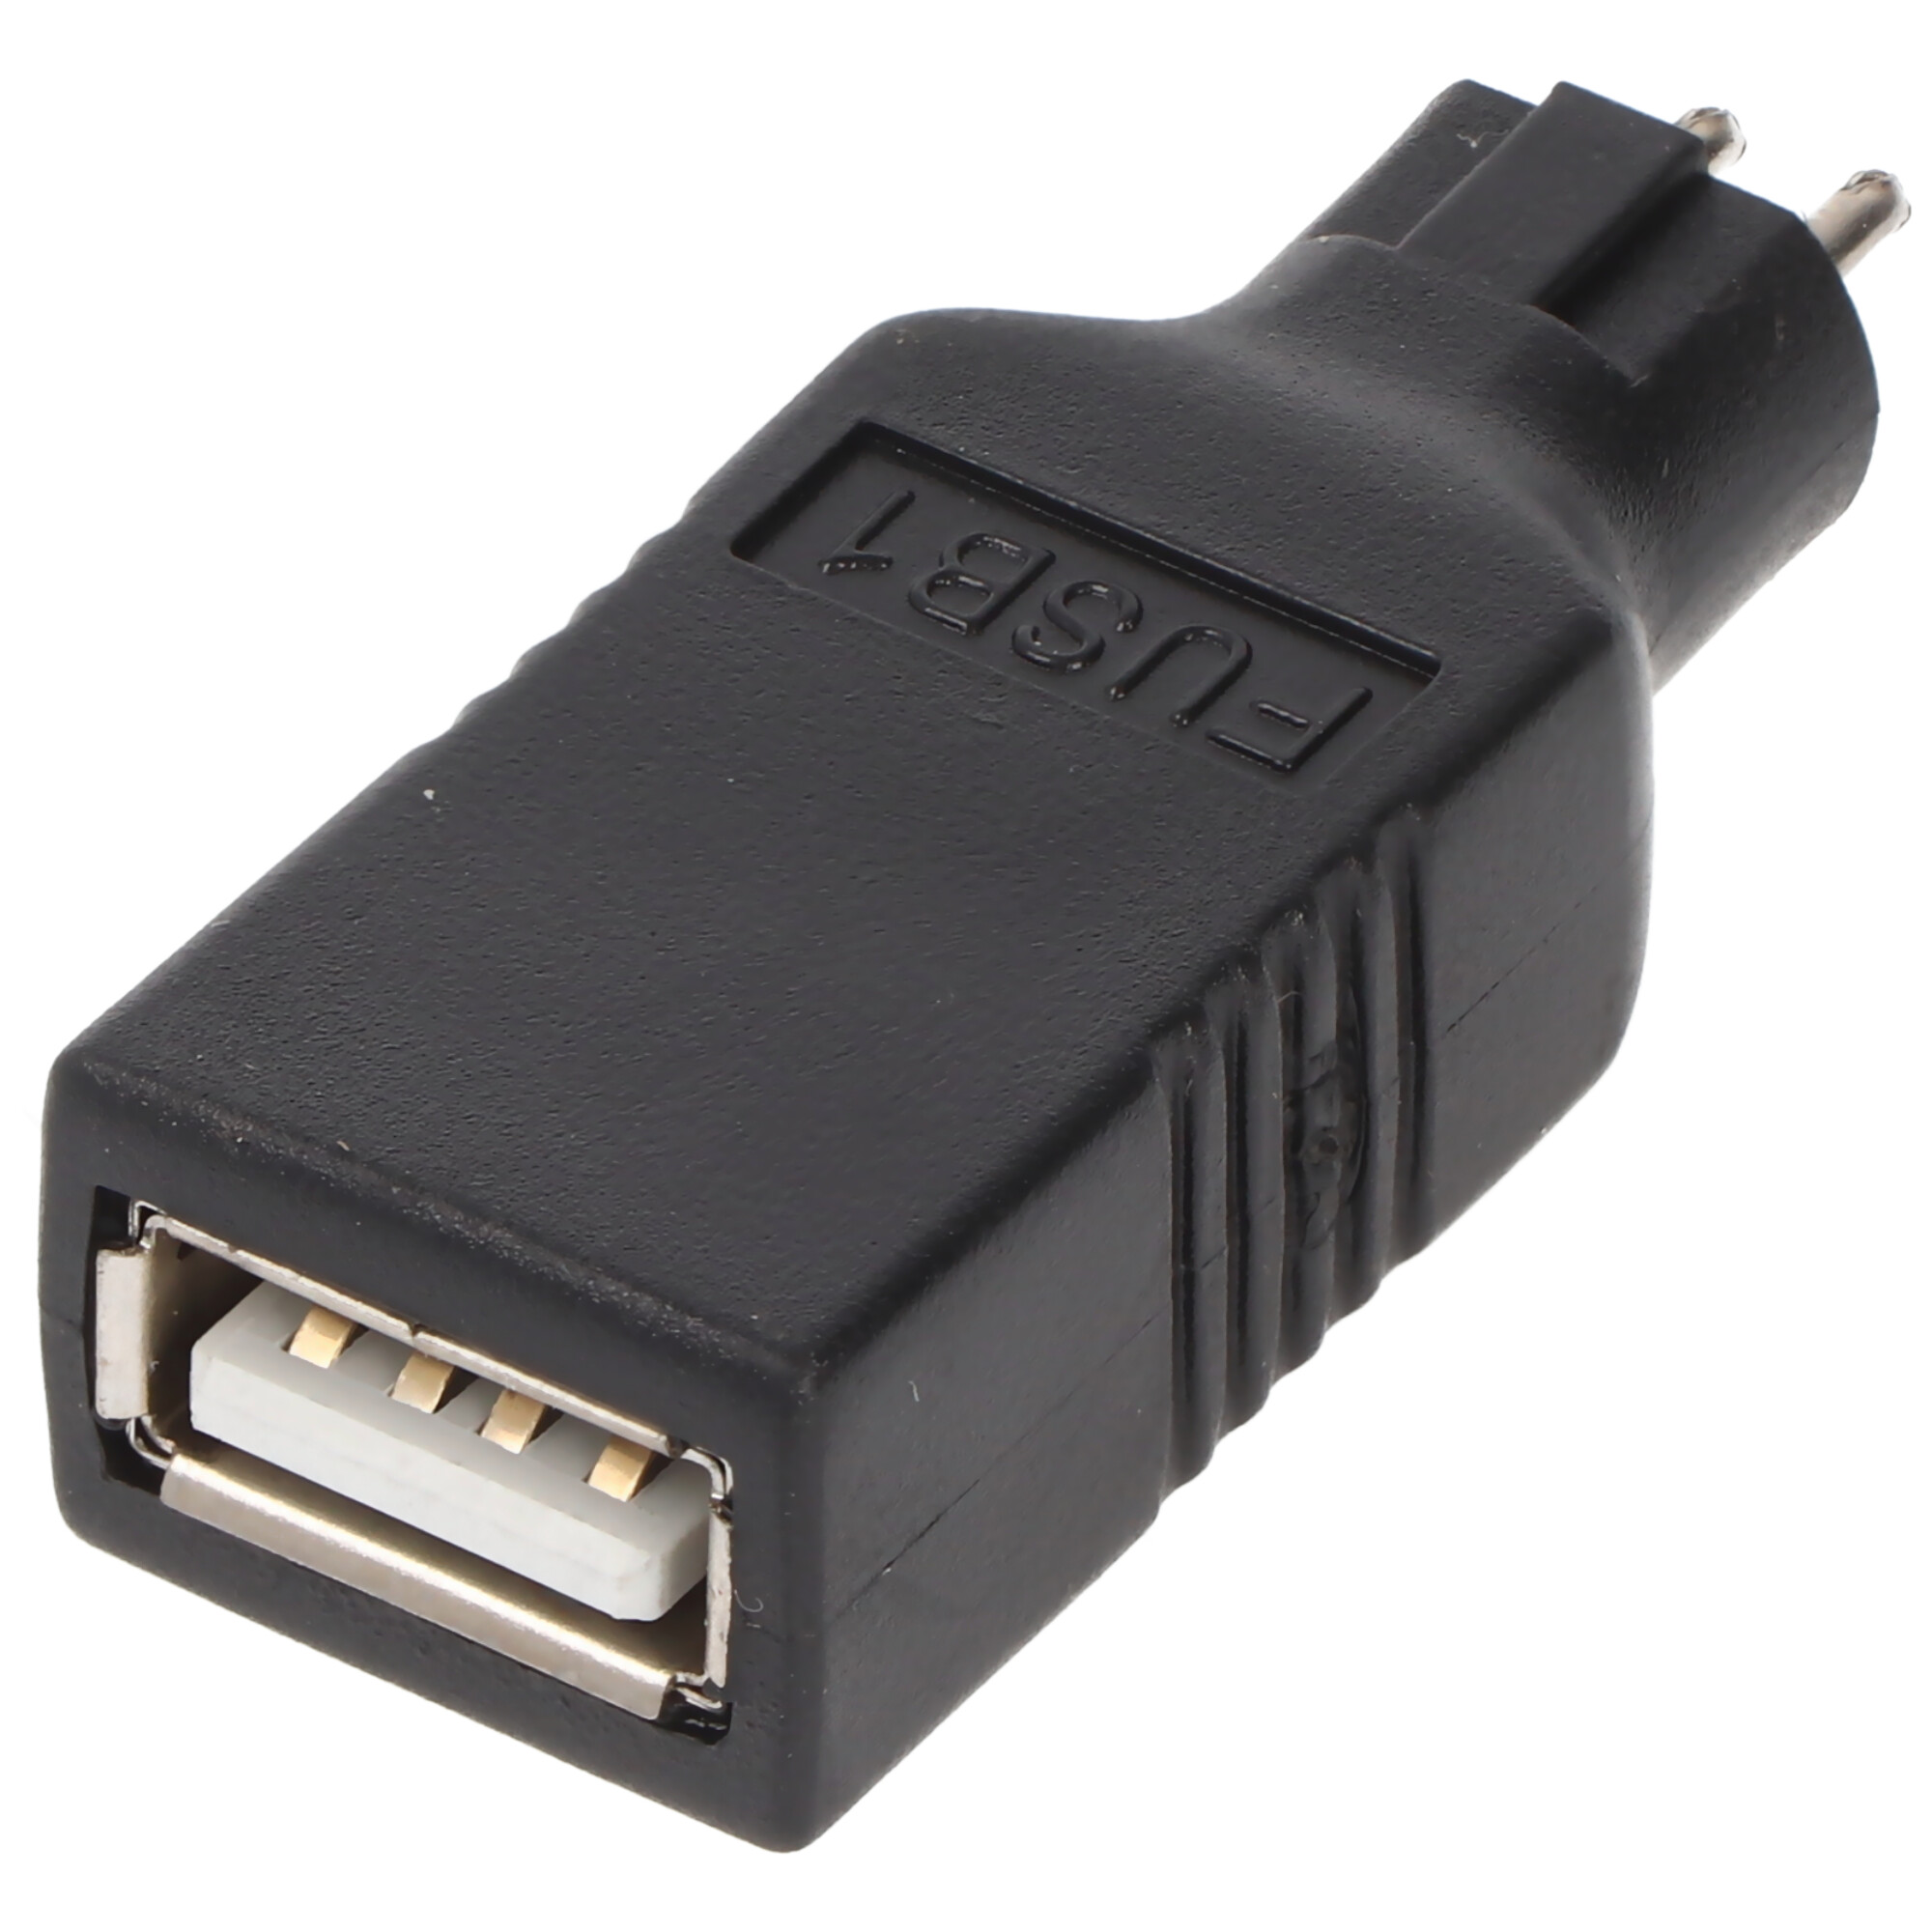 3 V - 12 V Universal-Netzteil inkl. 1 USB- und 8 DC-Adapter - max. 3,6 W und 0,6 A